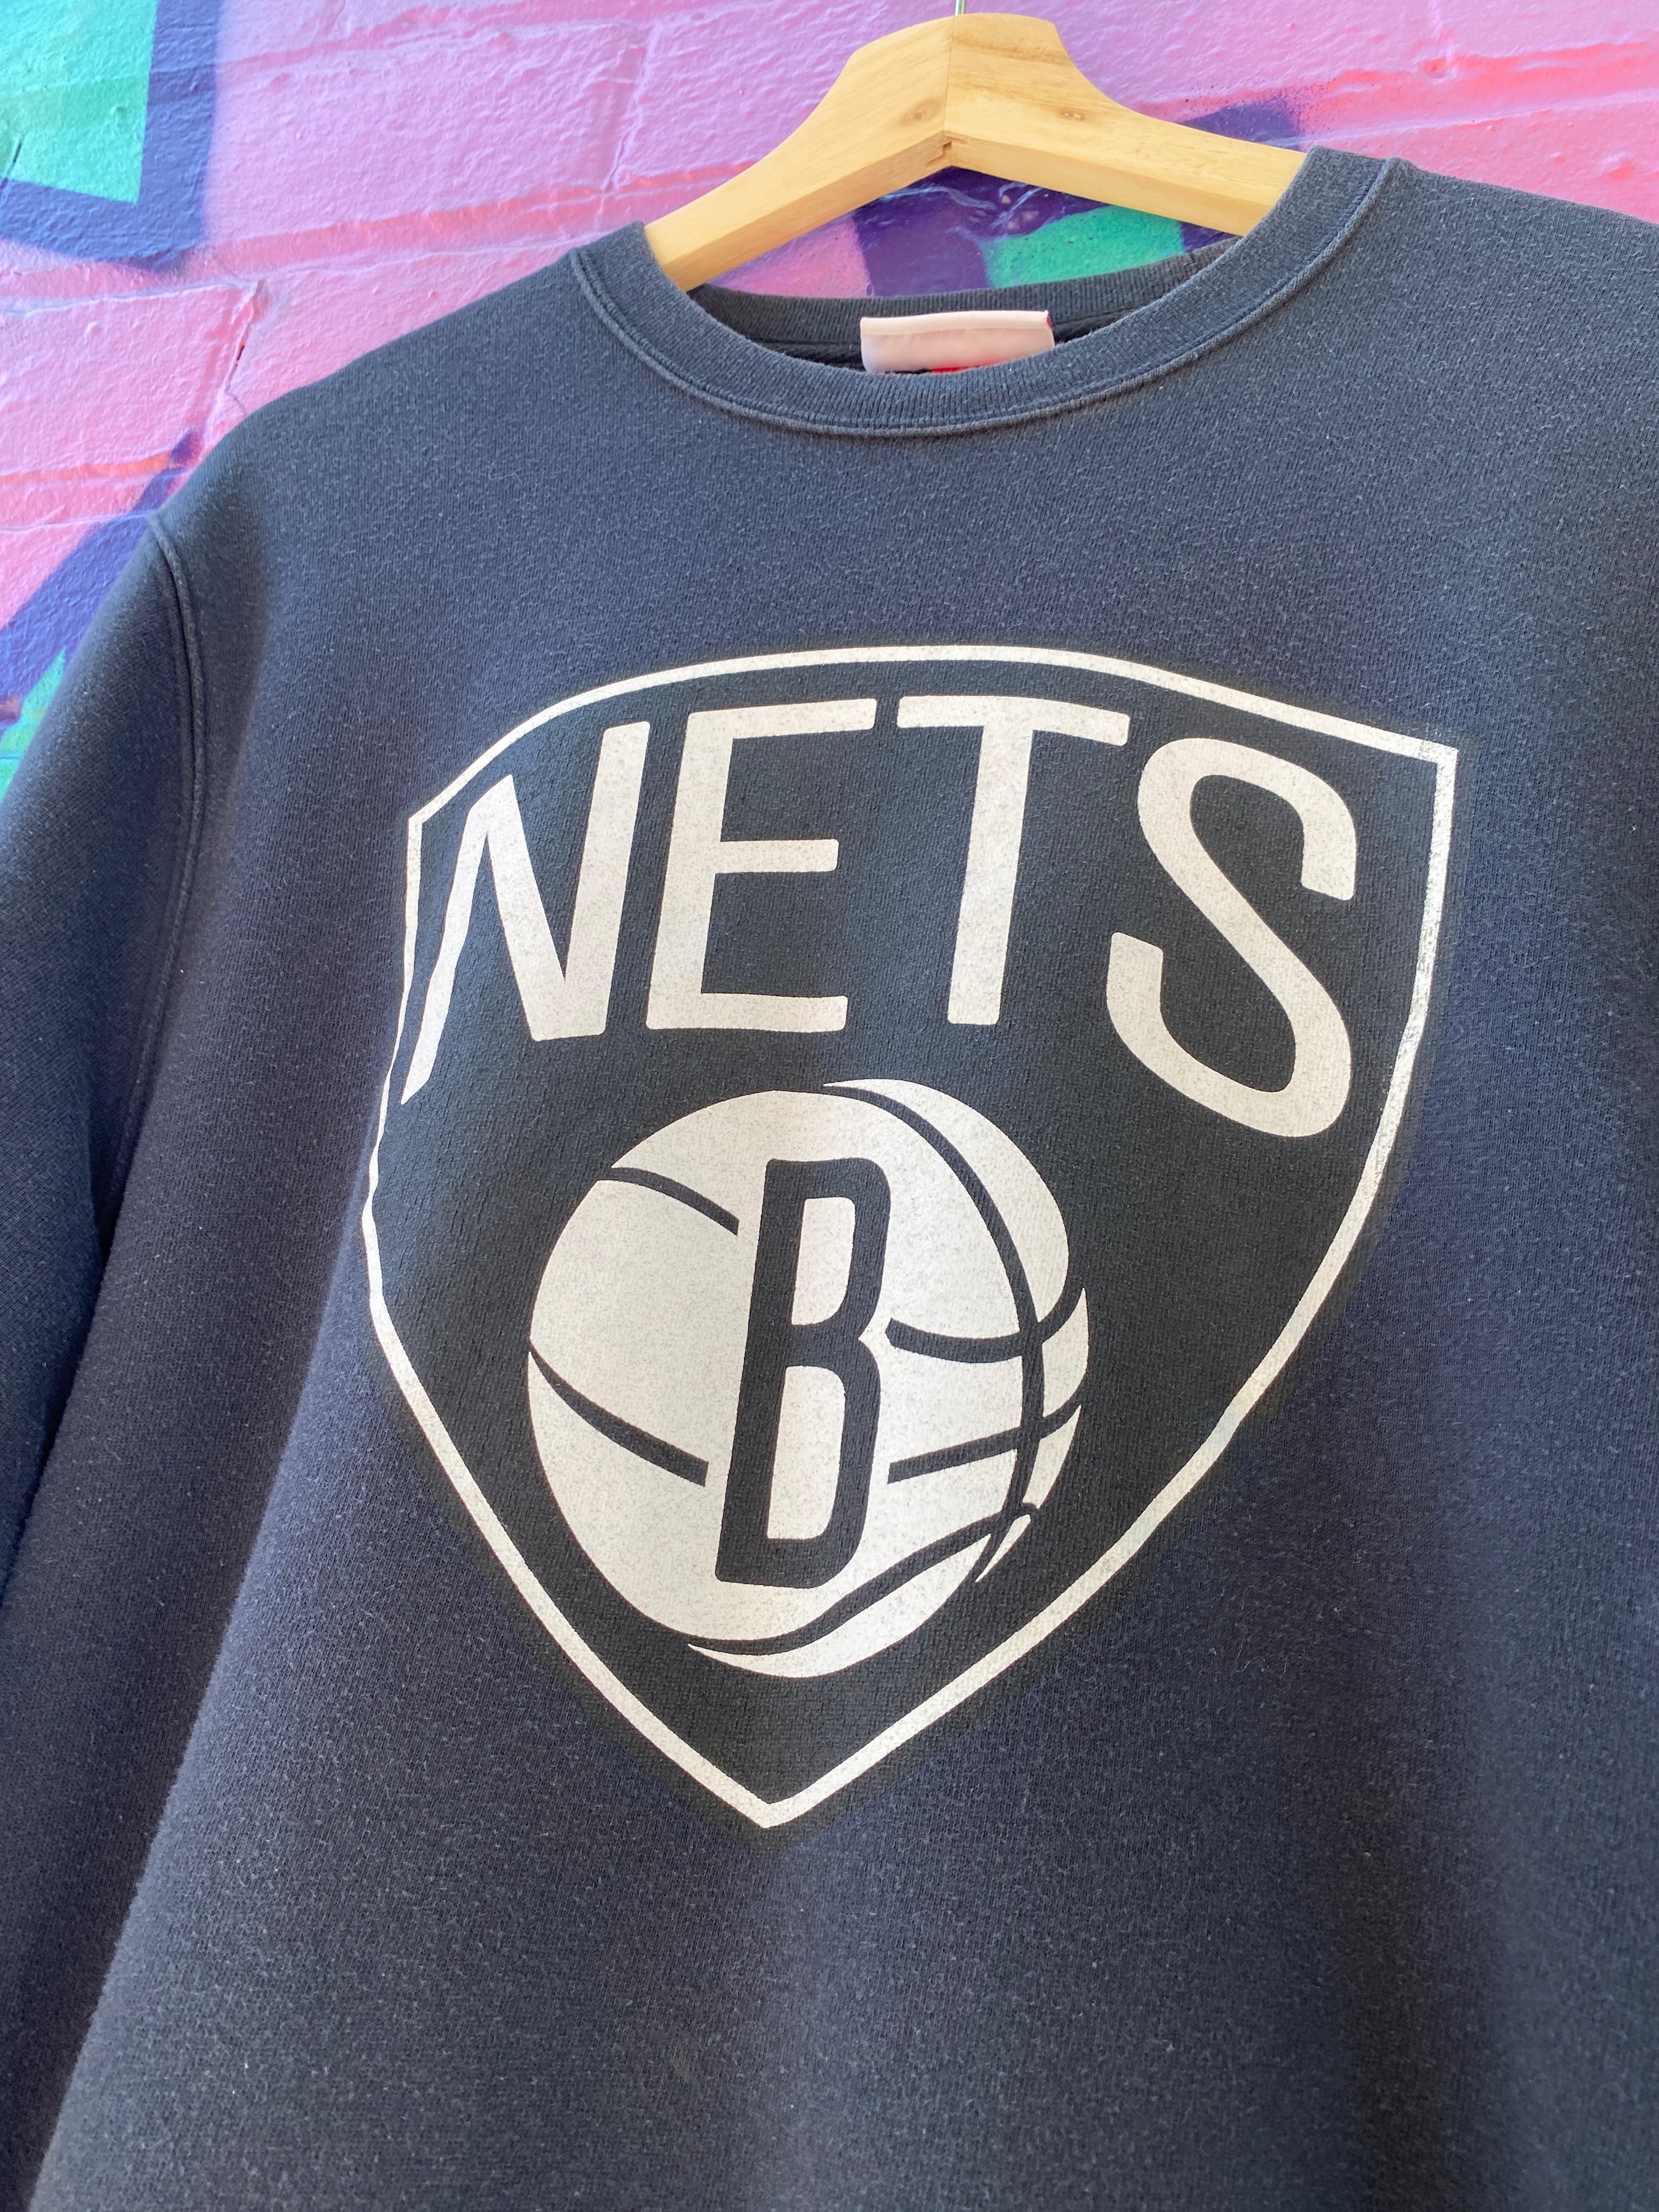 S - Mitchell And Ness Brooklyn Nets Jumper